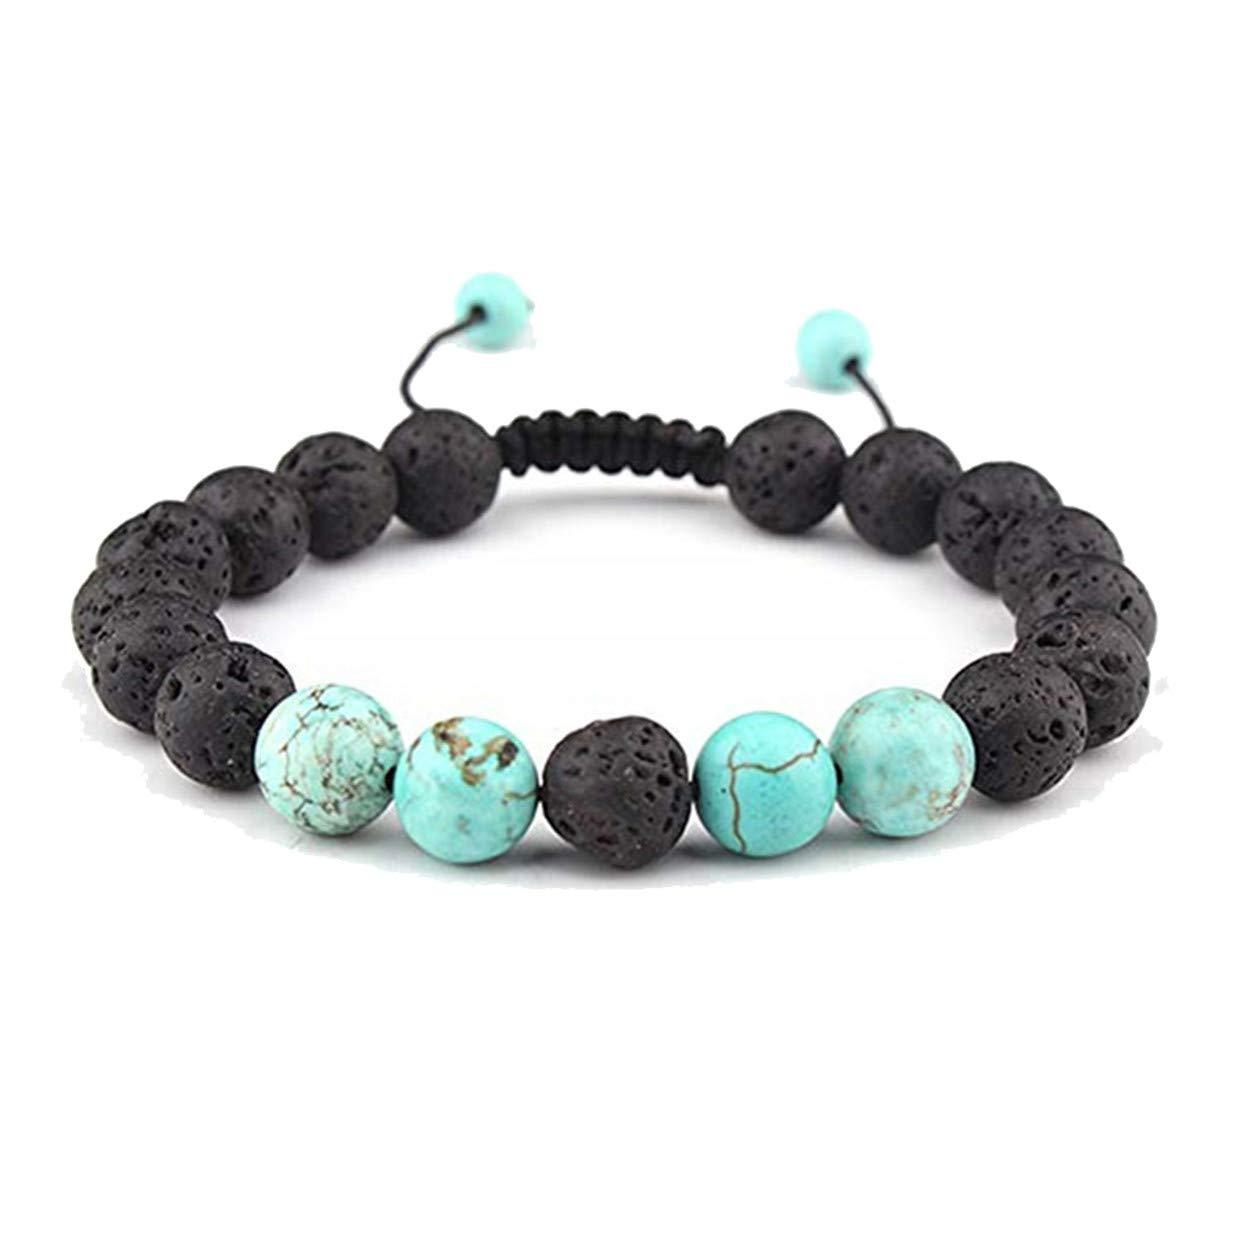 Adjustable Anxiety Diffusing Lava Stone Bracelet w/Turquoise Stones - KathyRoseNaturals